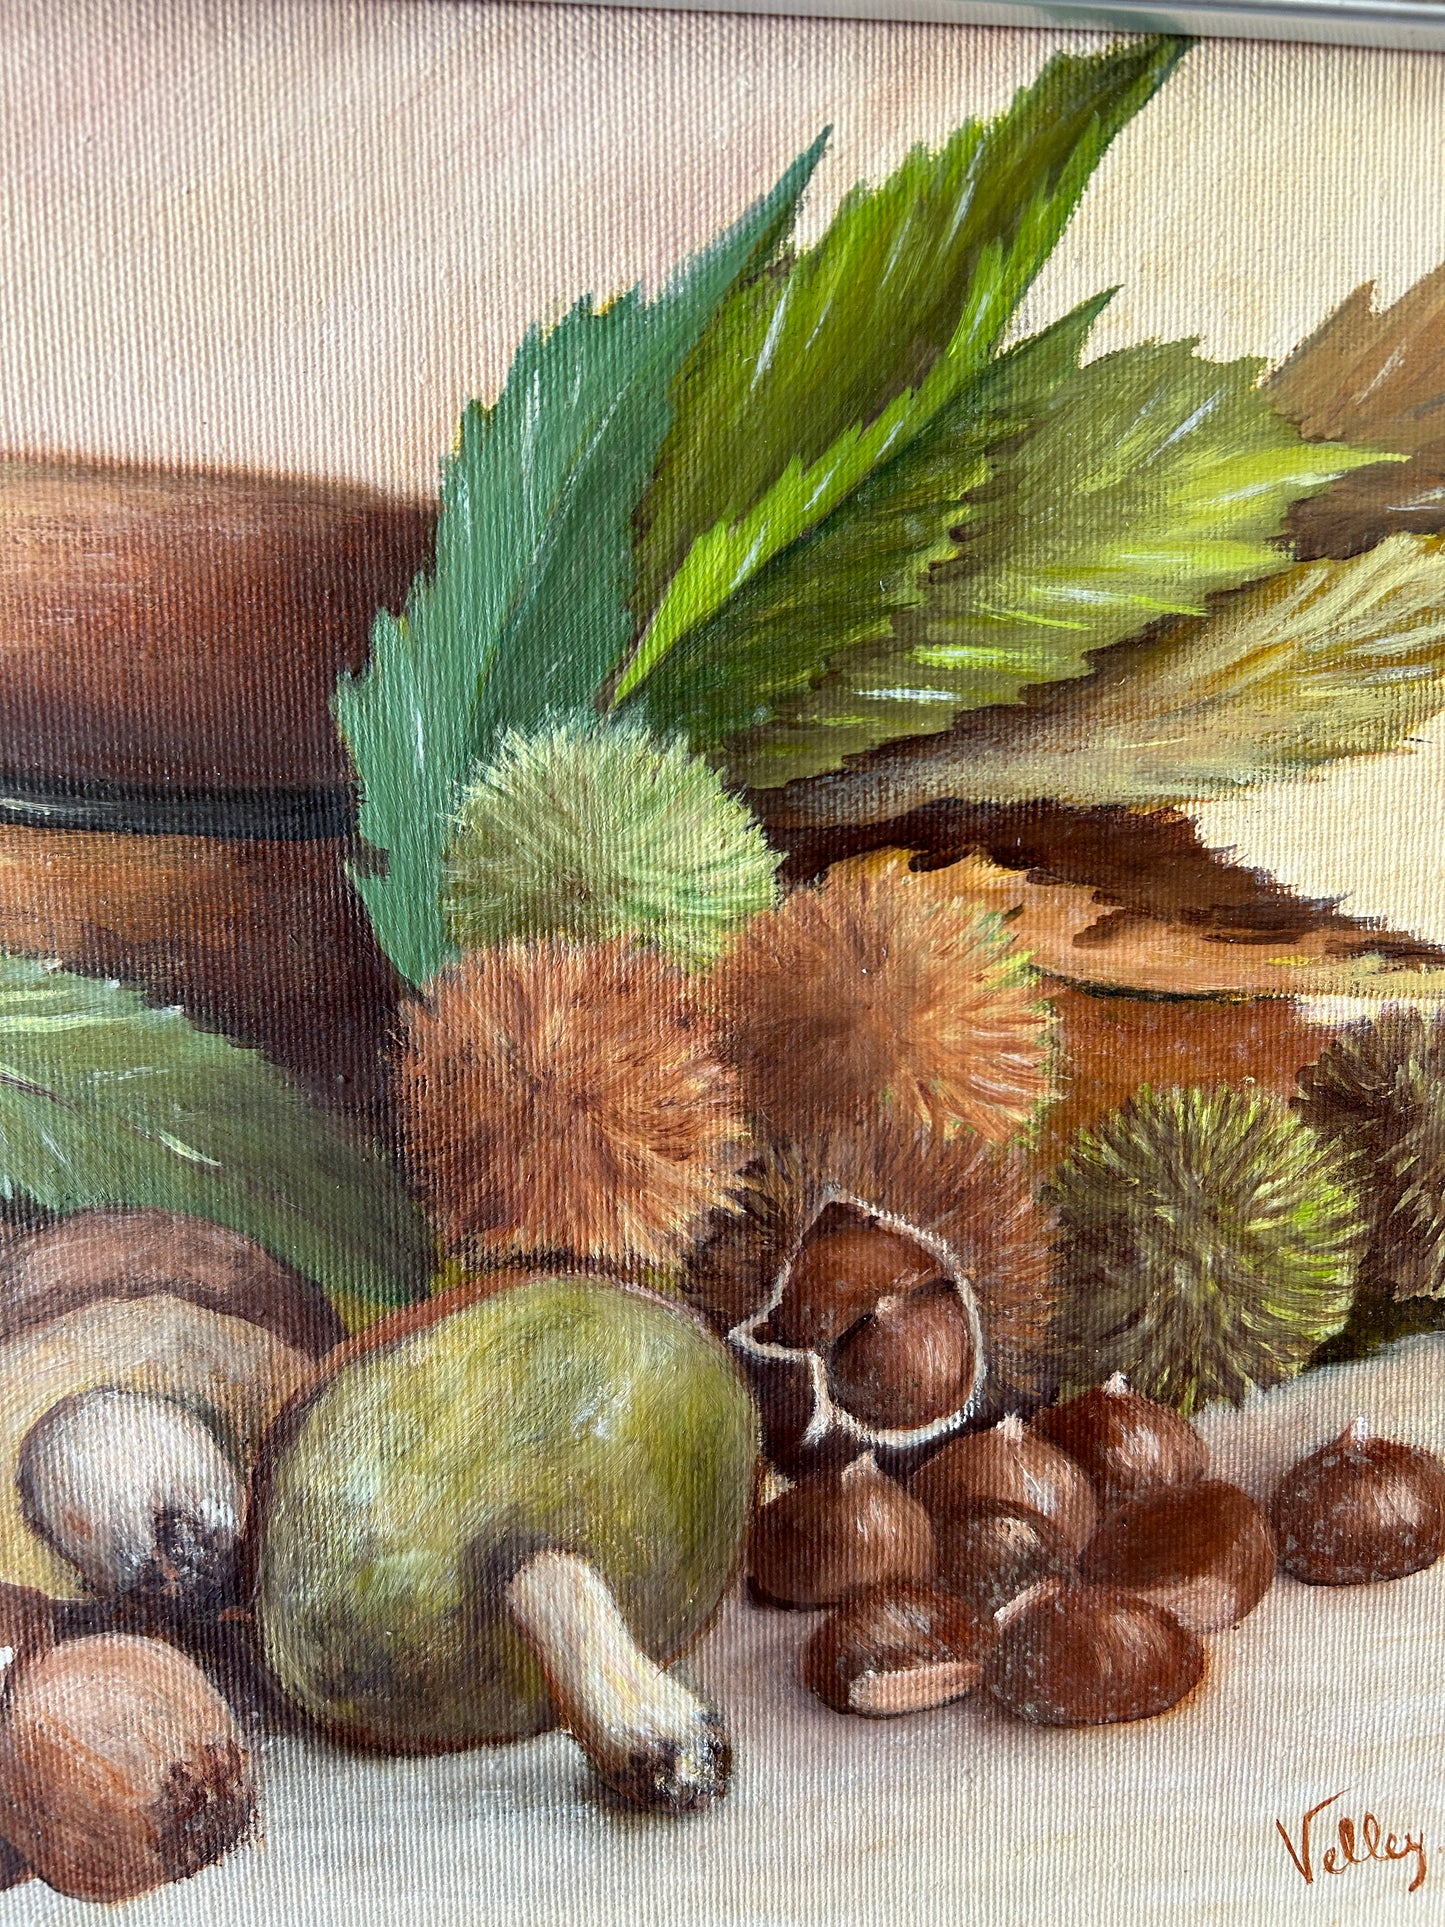 Mid Century Oil On Canvas Still Life of Mushrooms and Chestnuts